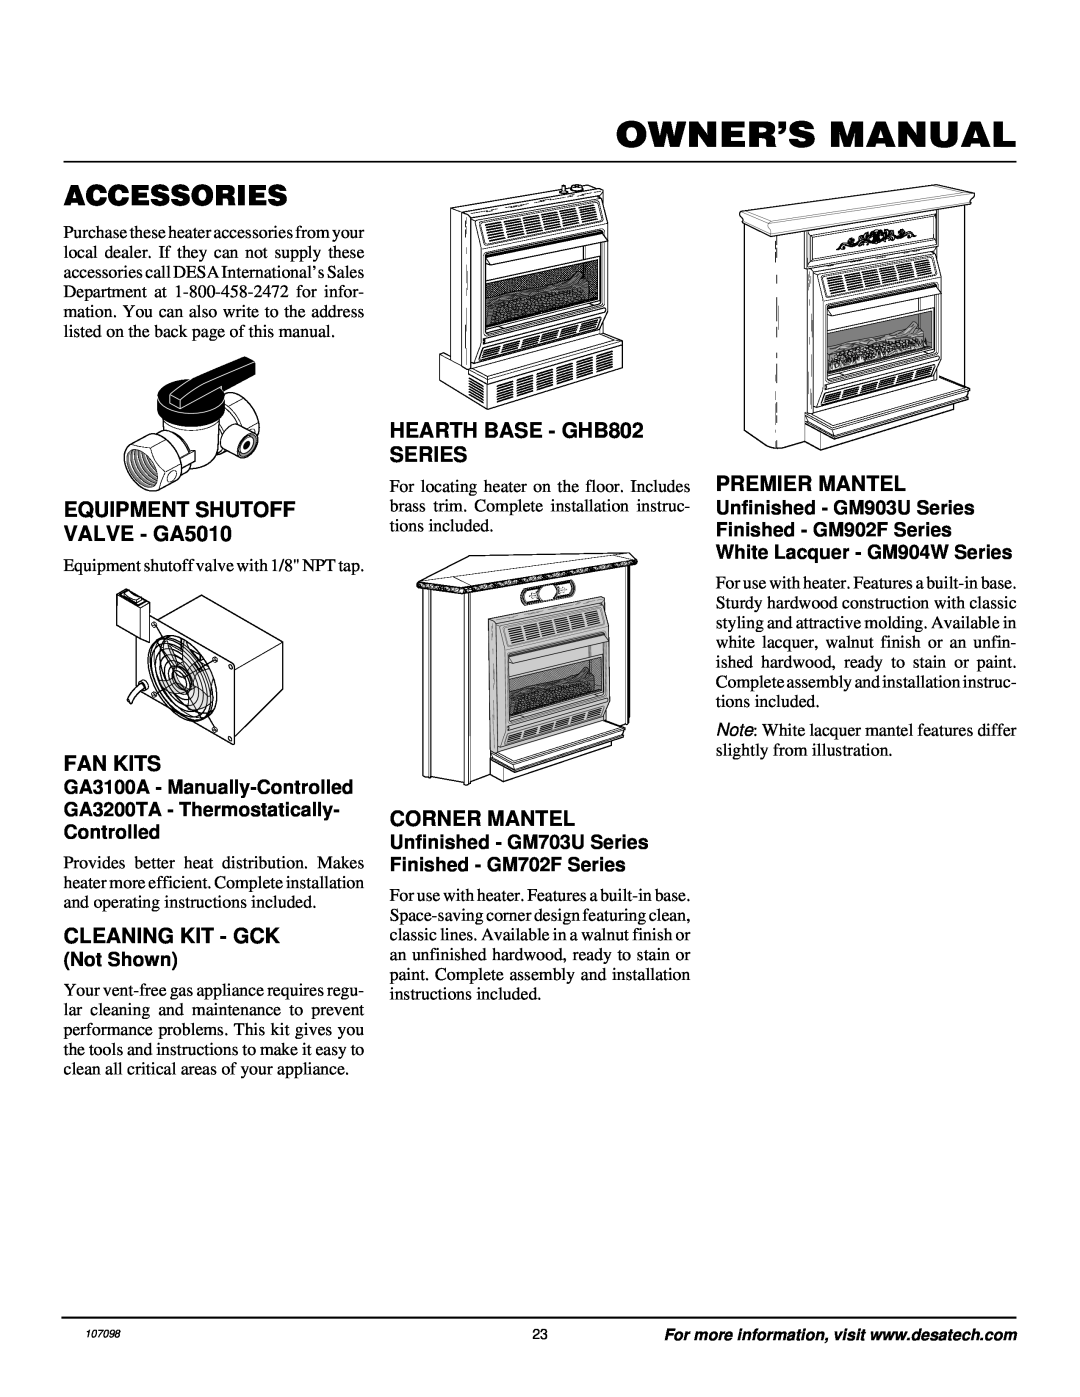 Vanguard Heating VMH3000TPA Accessories, EQUIPMENT SHUTOFF VALVE - GA5010, Fan Kits, Cleaning Kit - Gck, Corner Mantel 